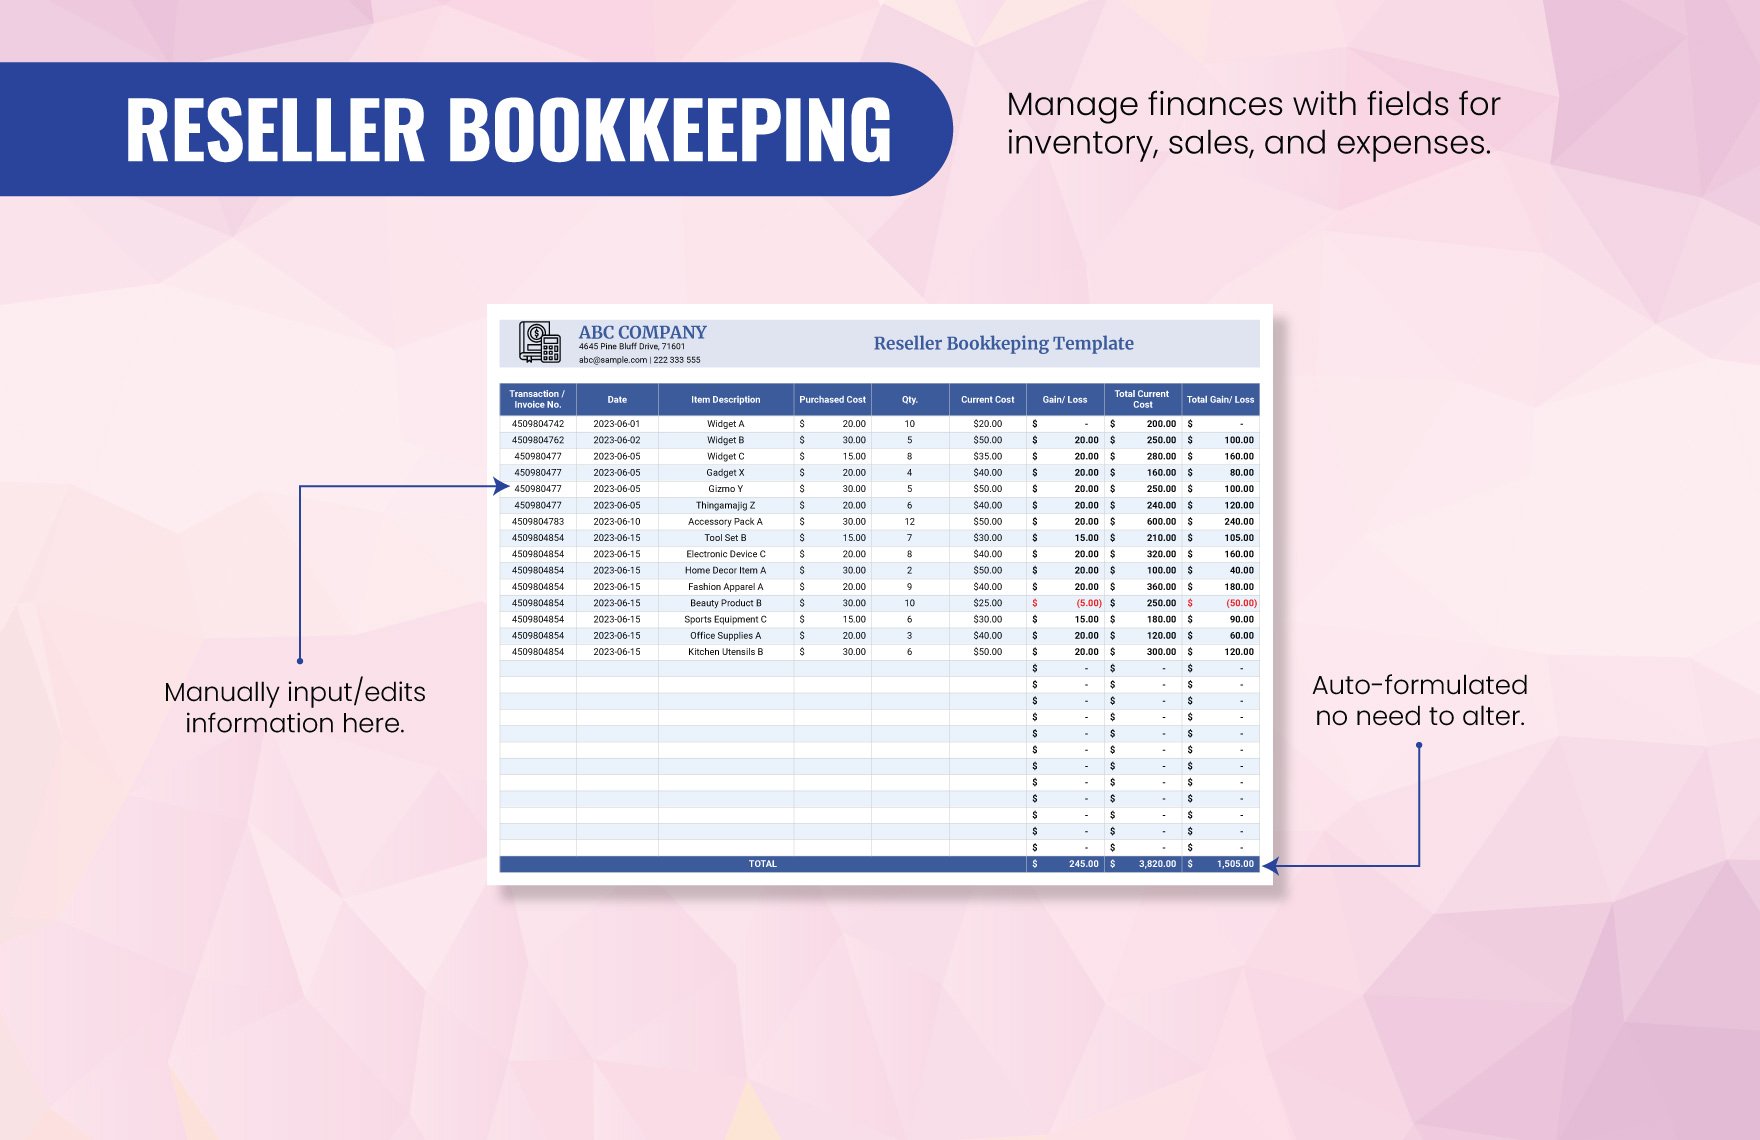 Reseller Bookkeeping Template